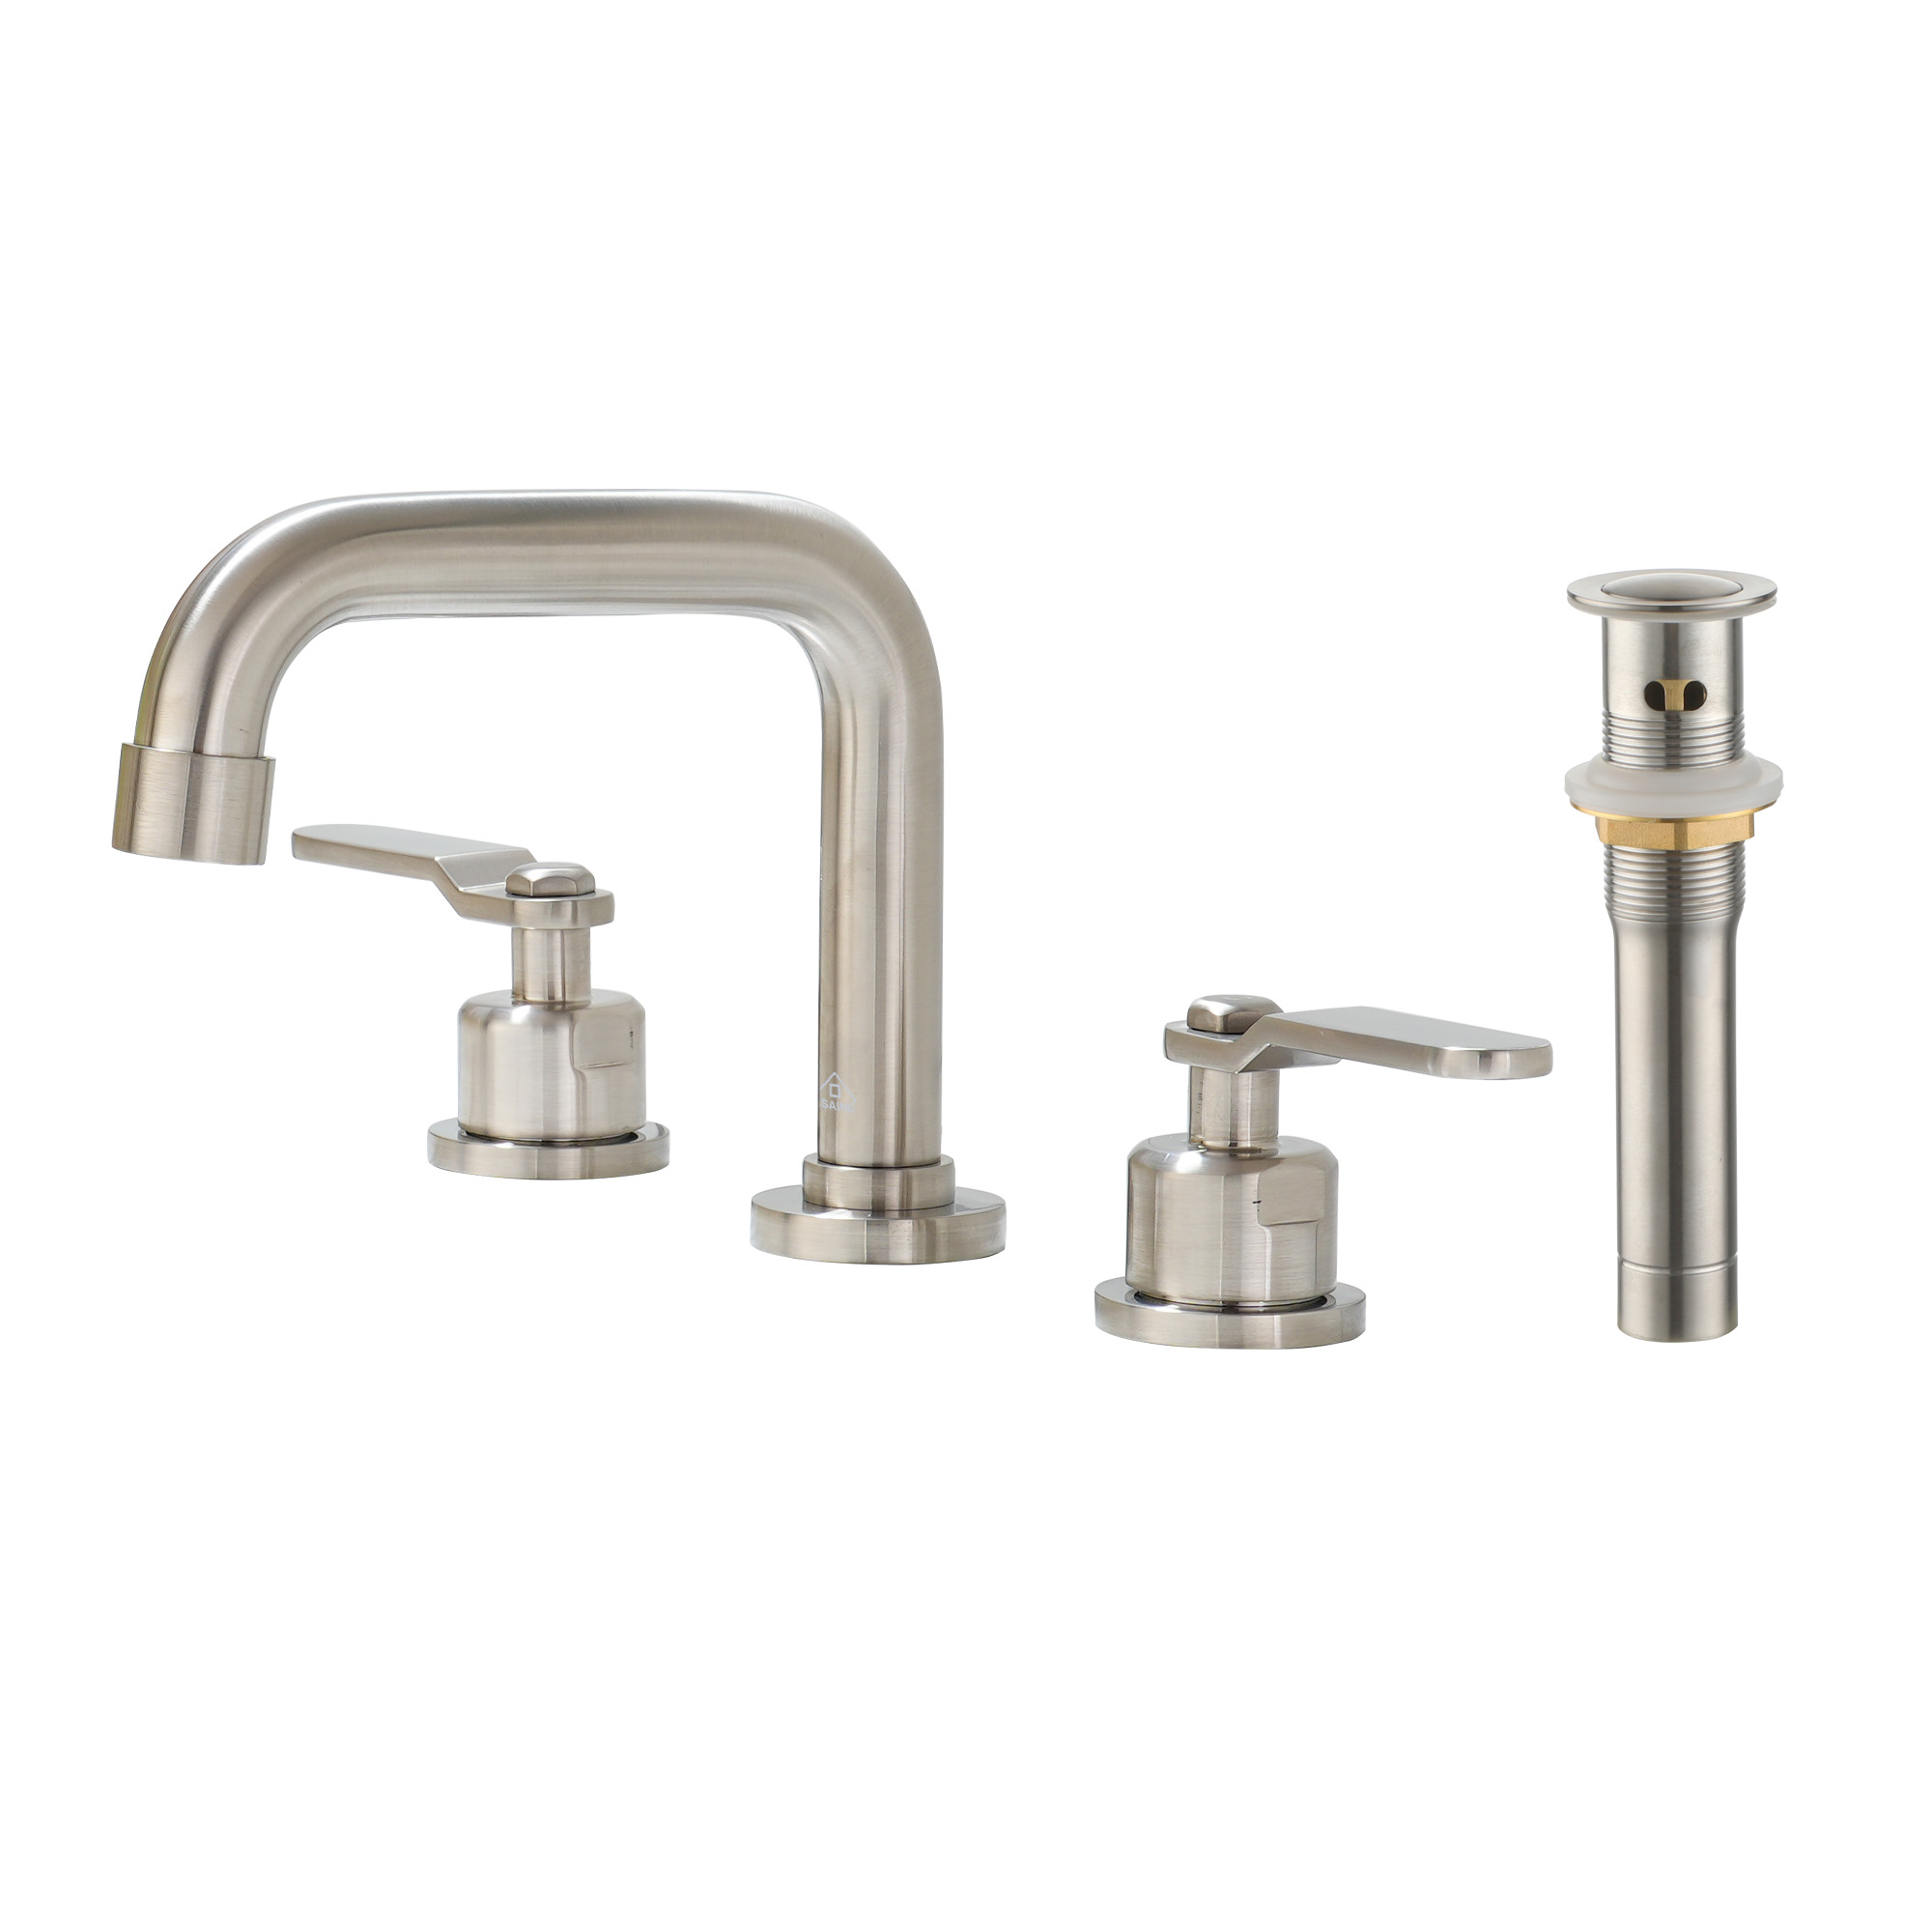 Casainc 2-Handle Bathroom Sink Faucet Widespread Modern Bathroom Faucet with Drain Assembly, 3-Hole Application